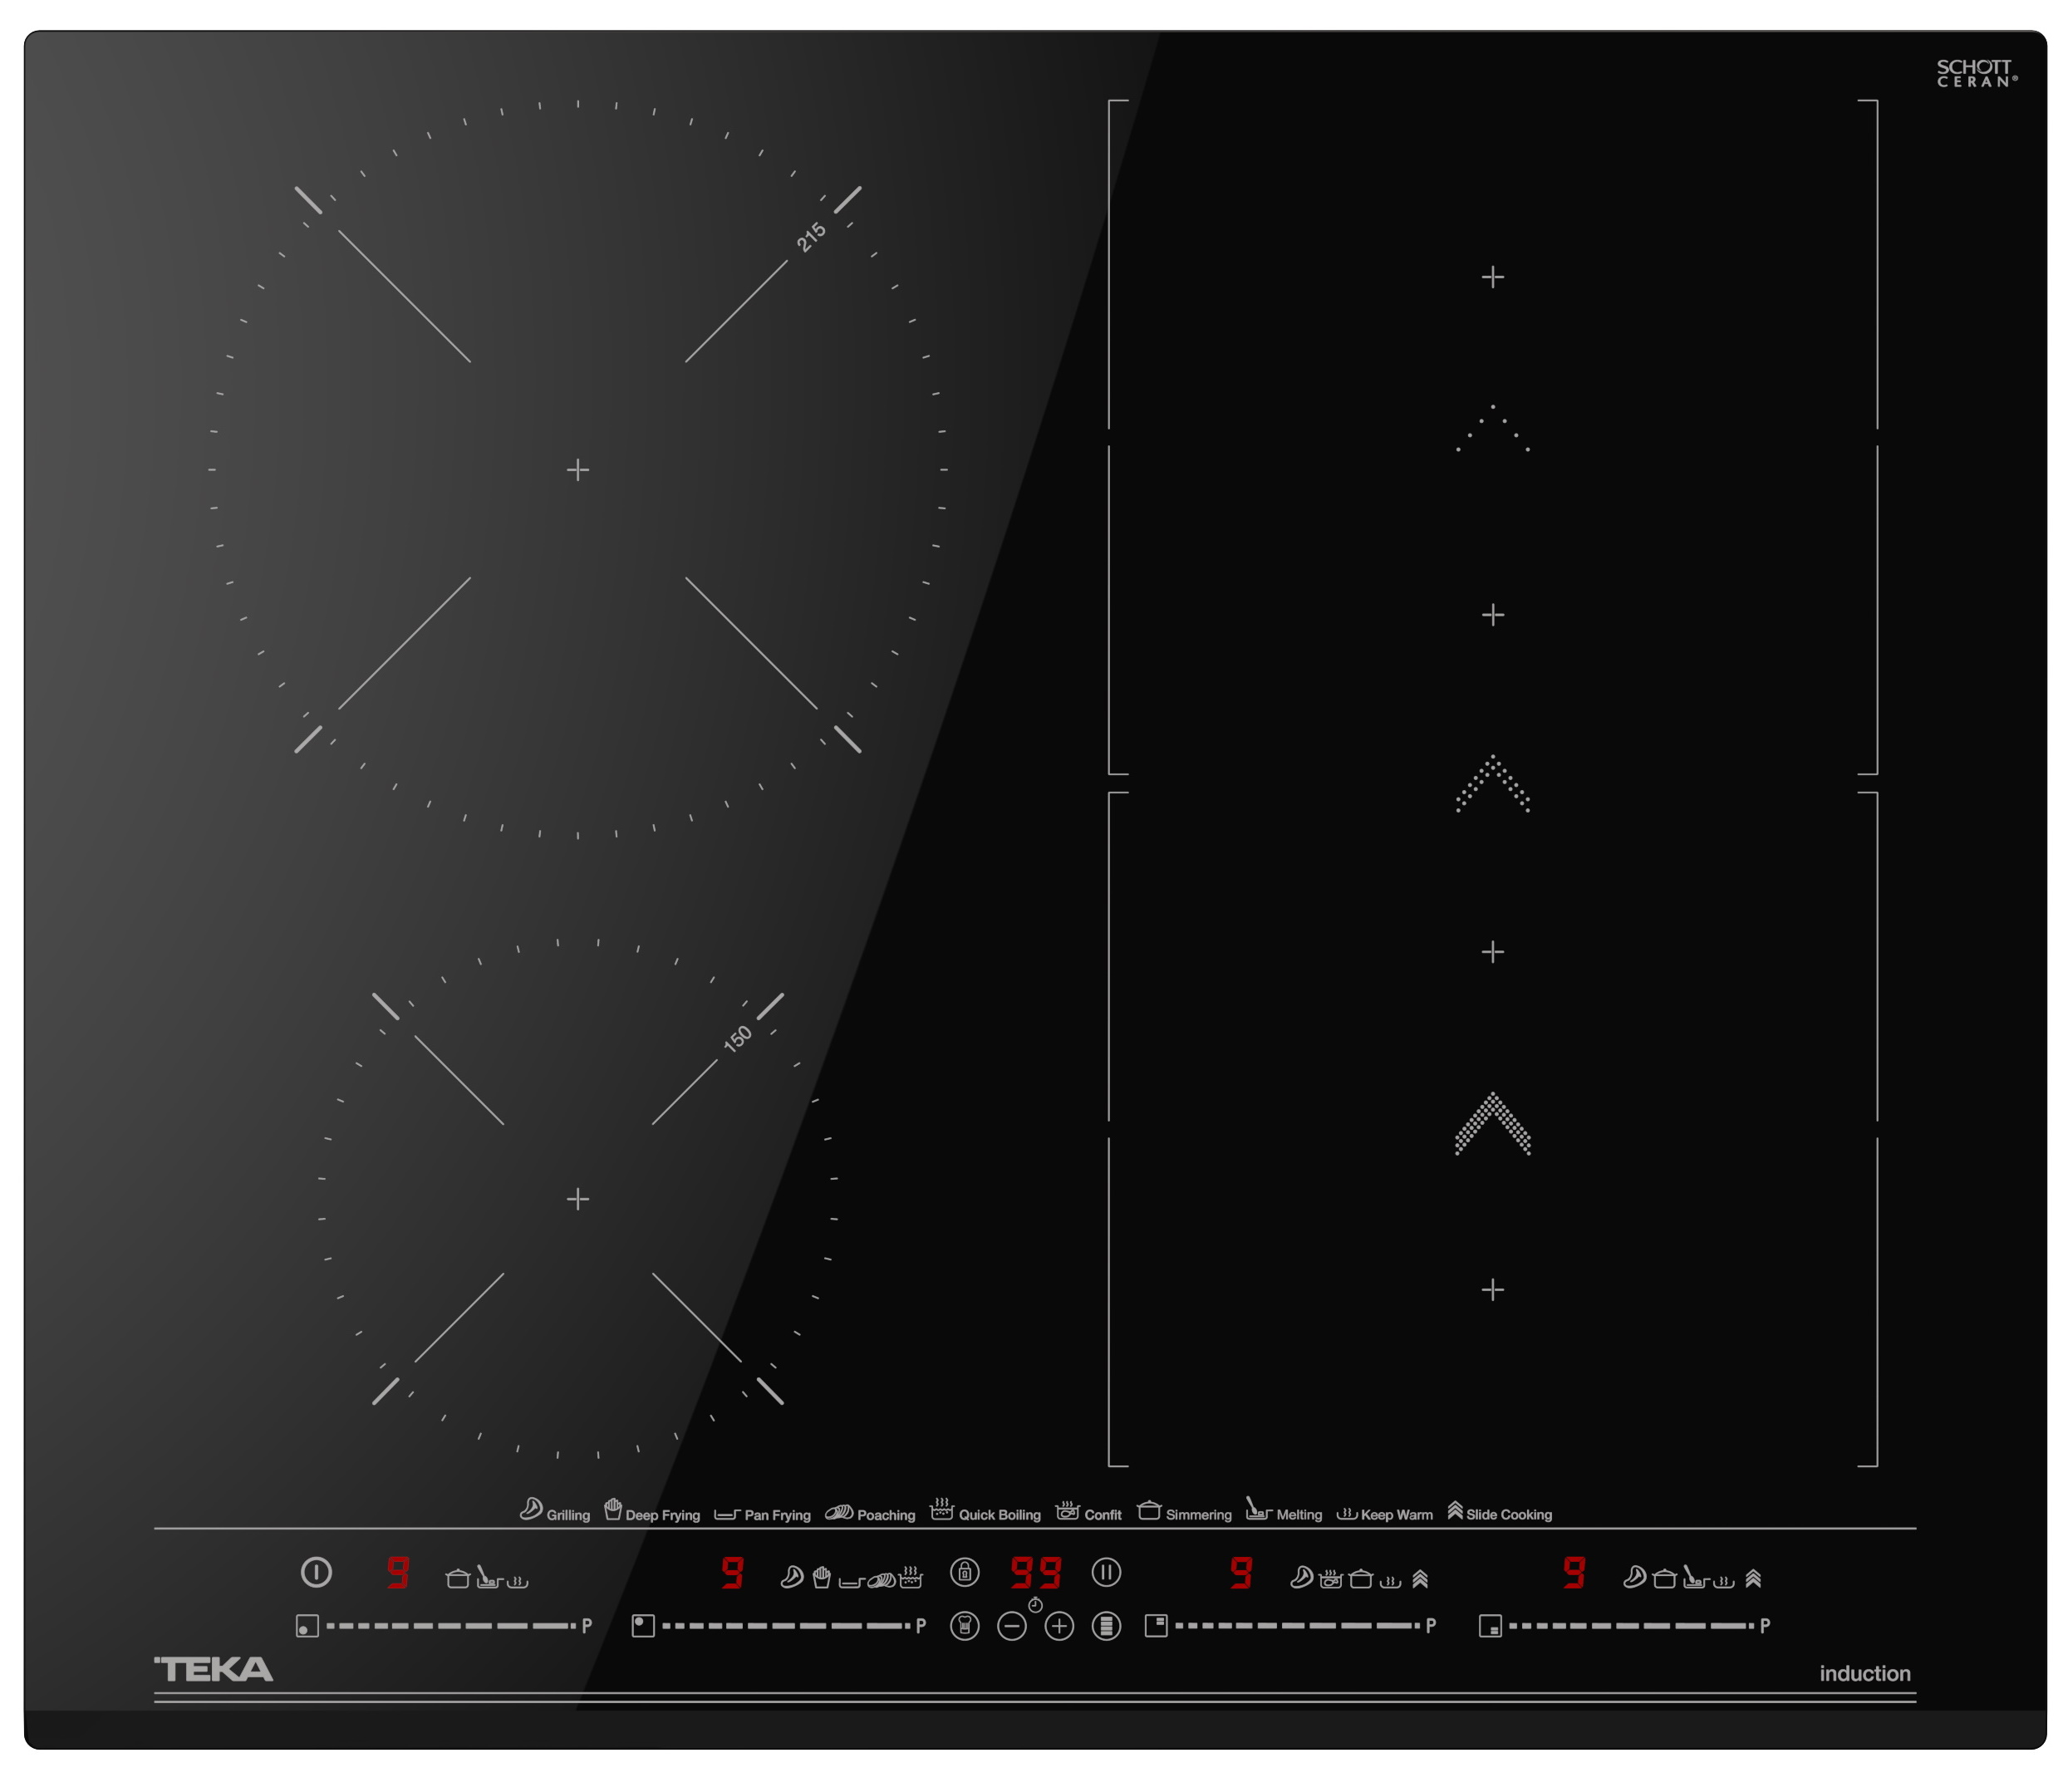 Plita inductie incorporabila Teka IZS 66800 cu 4 zone 60cm Flex SlideCooking Cristal negru 60cm